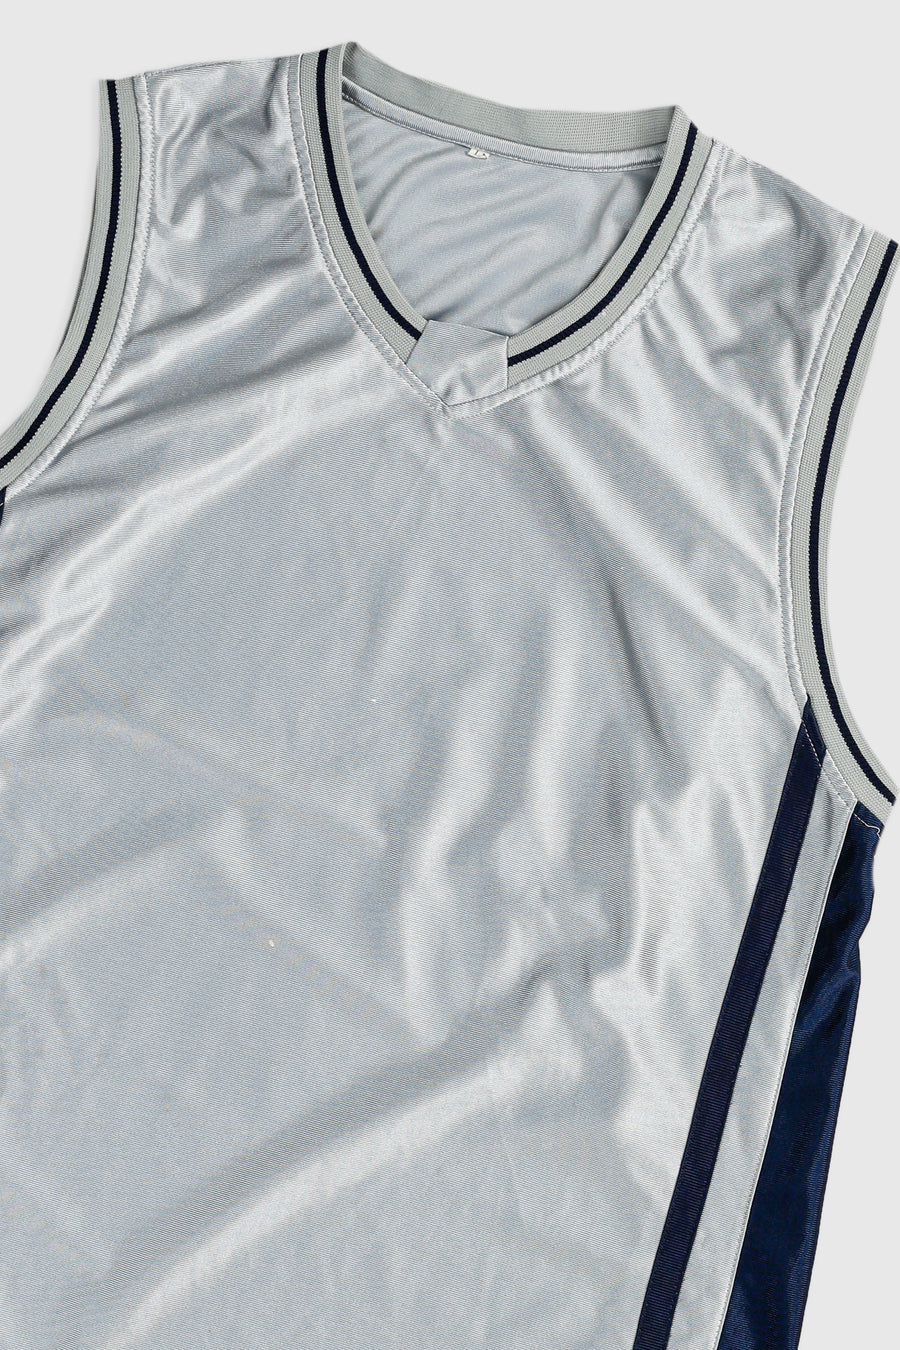 Vintage Basketball Jersey - L